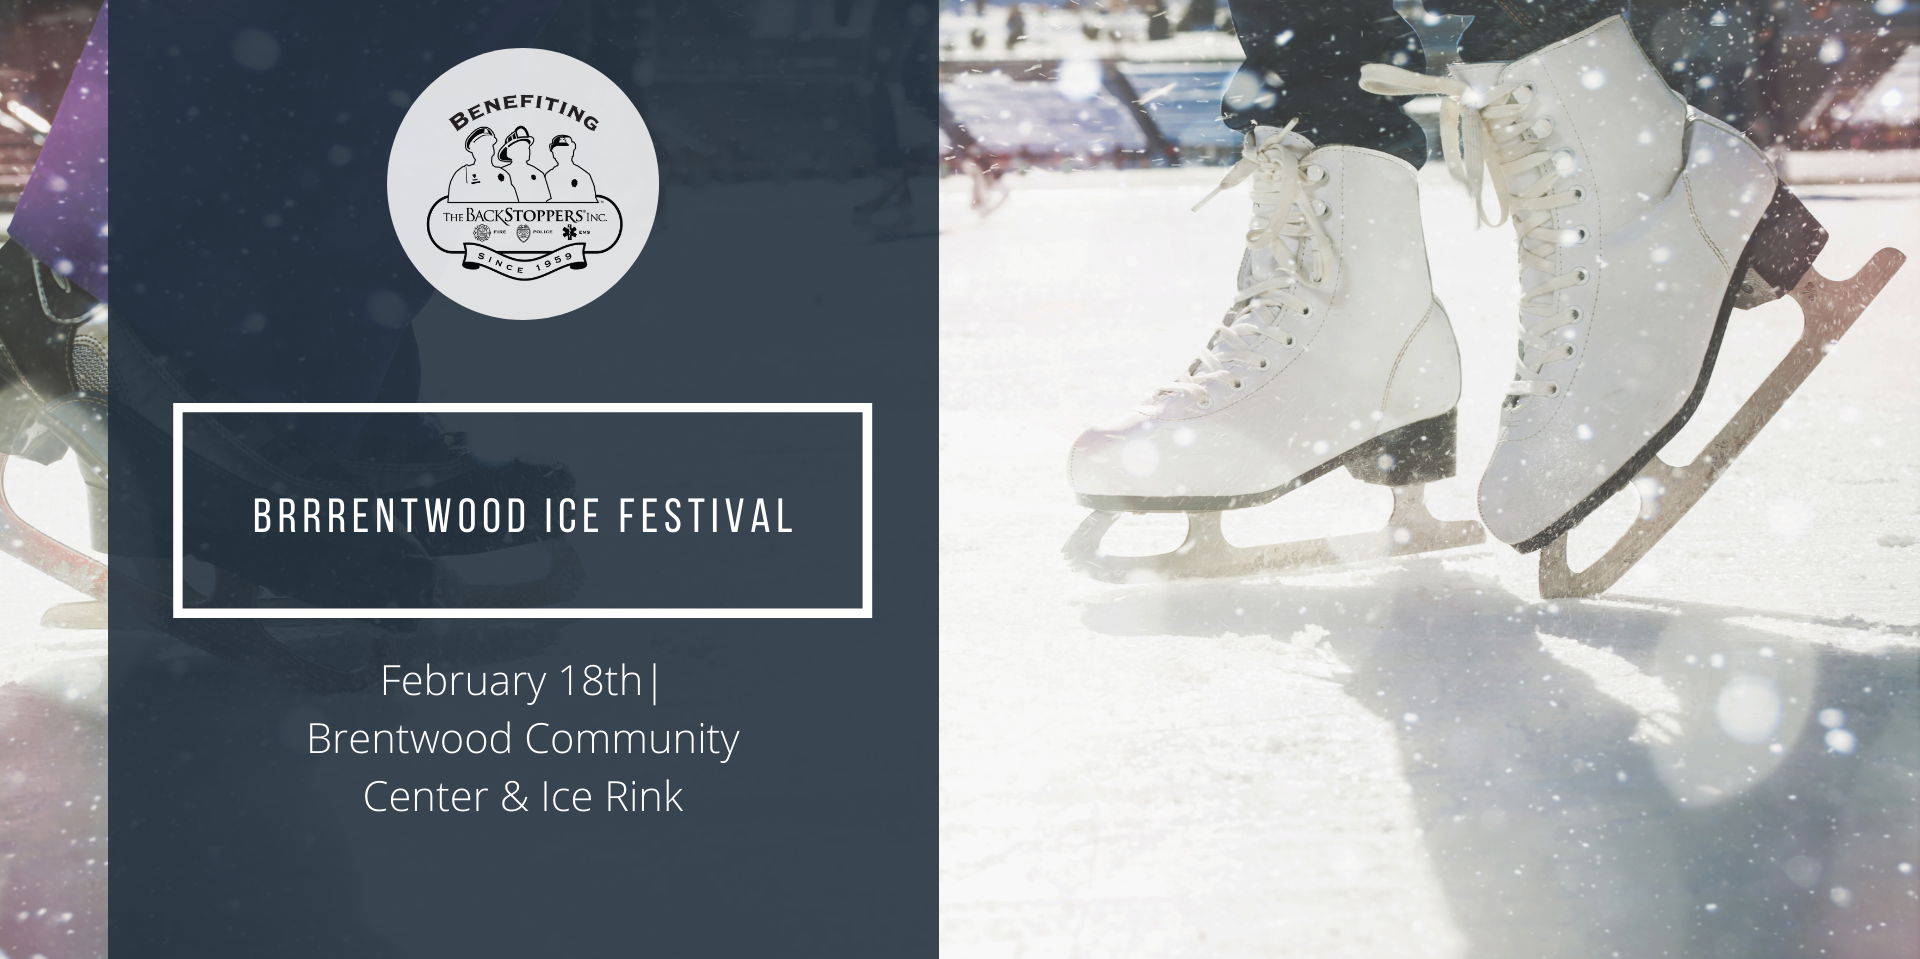 Brrrentwood Ice Festival promotional image